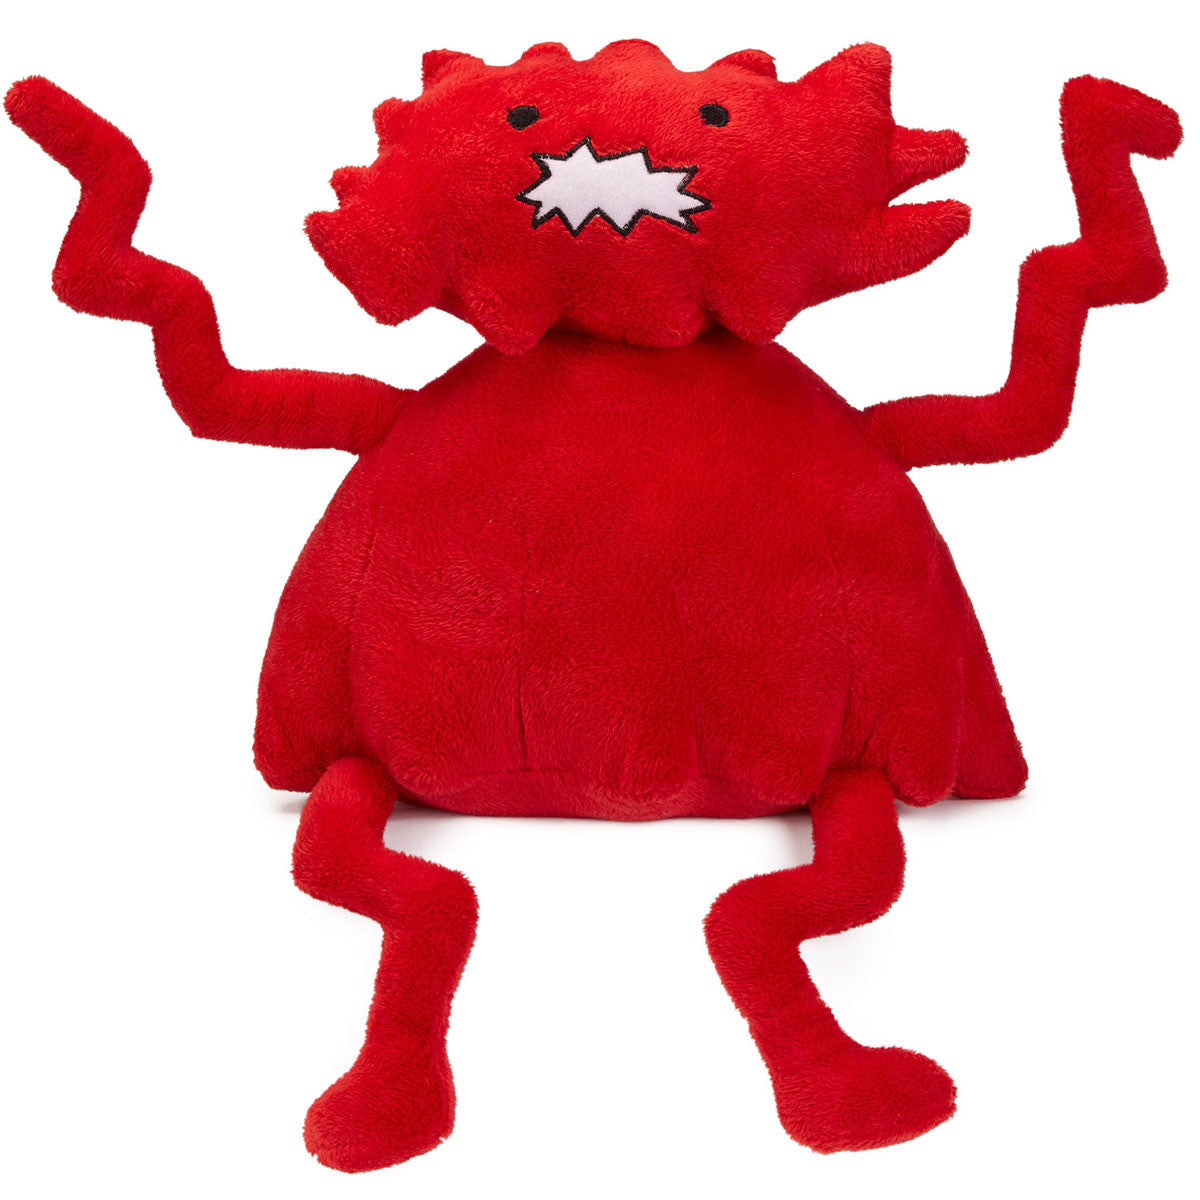 red stuffed animals